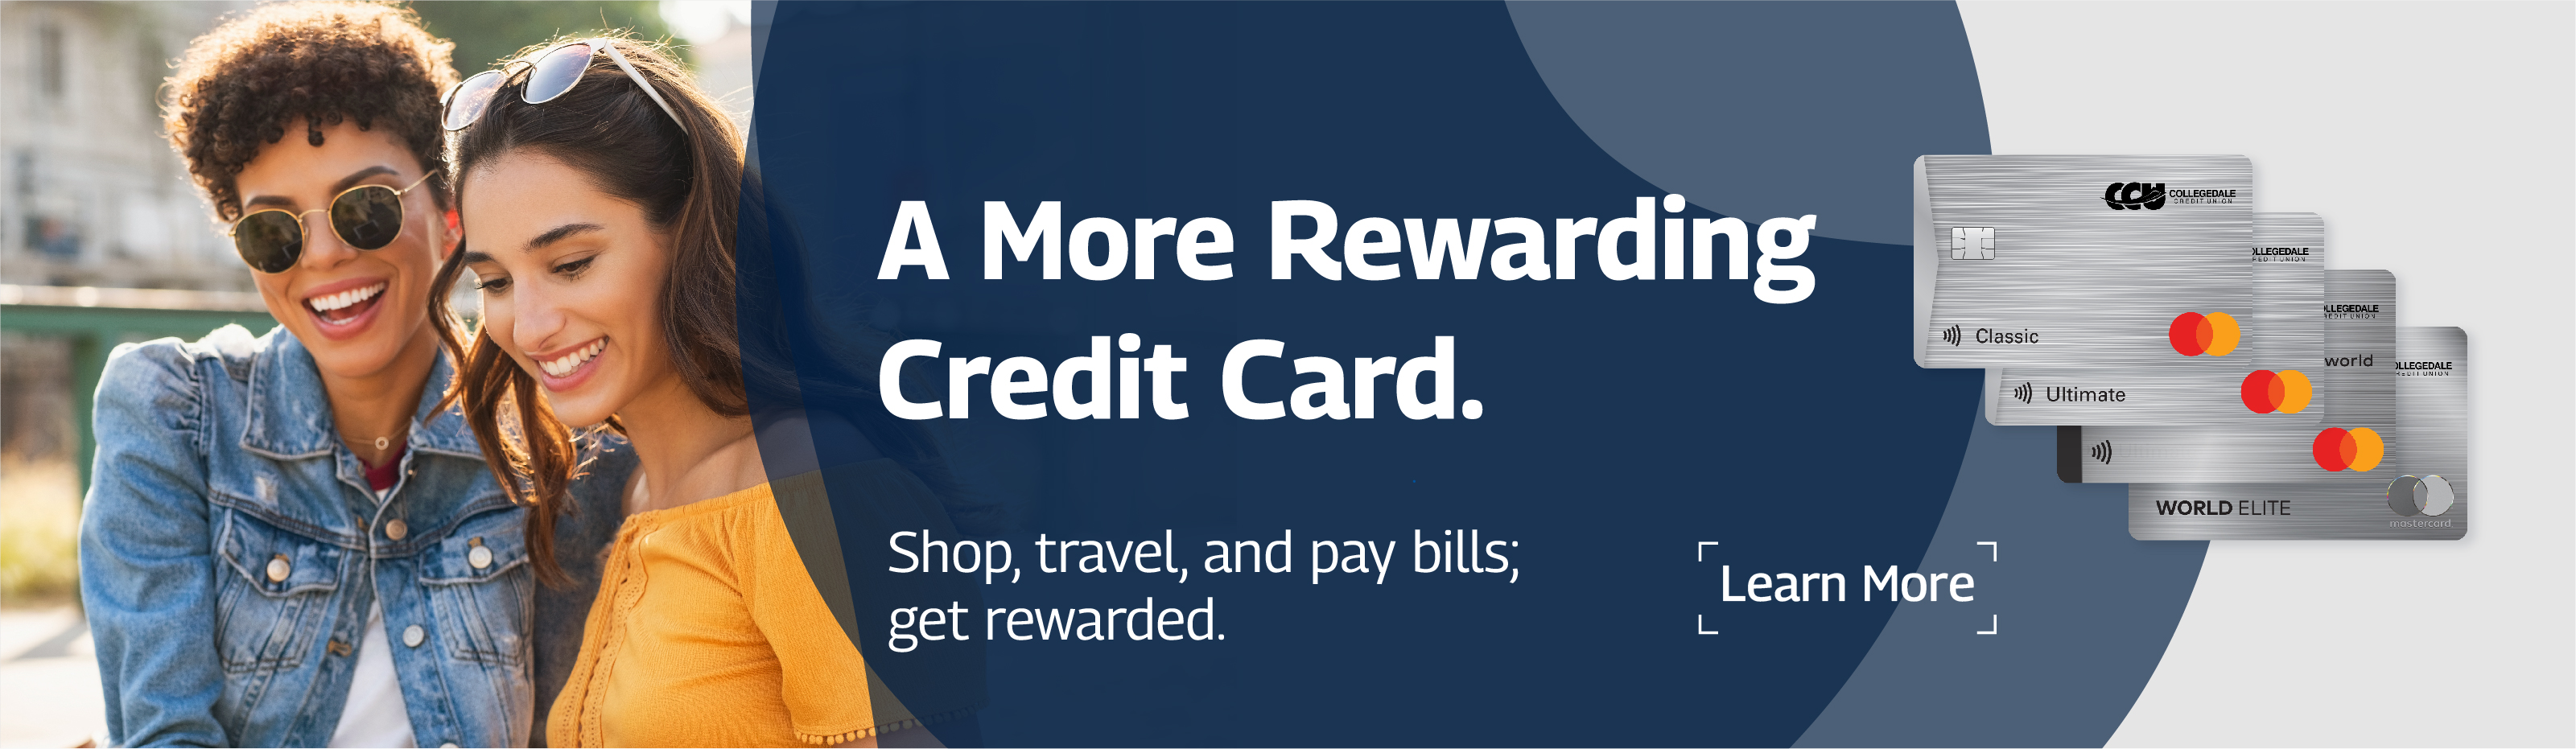 Banner - MasterCard: A more rewarding Credit Card.